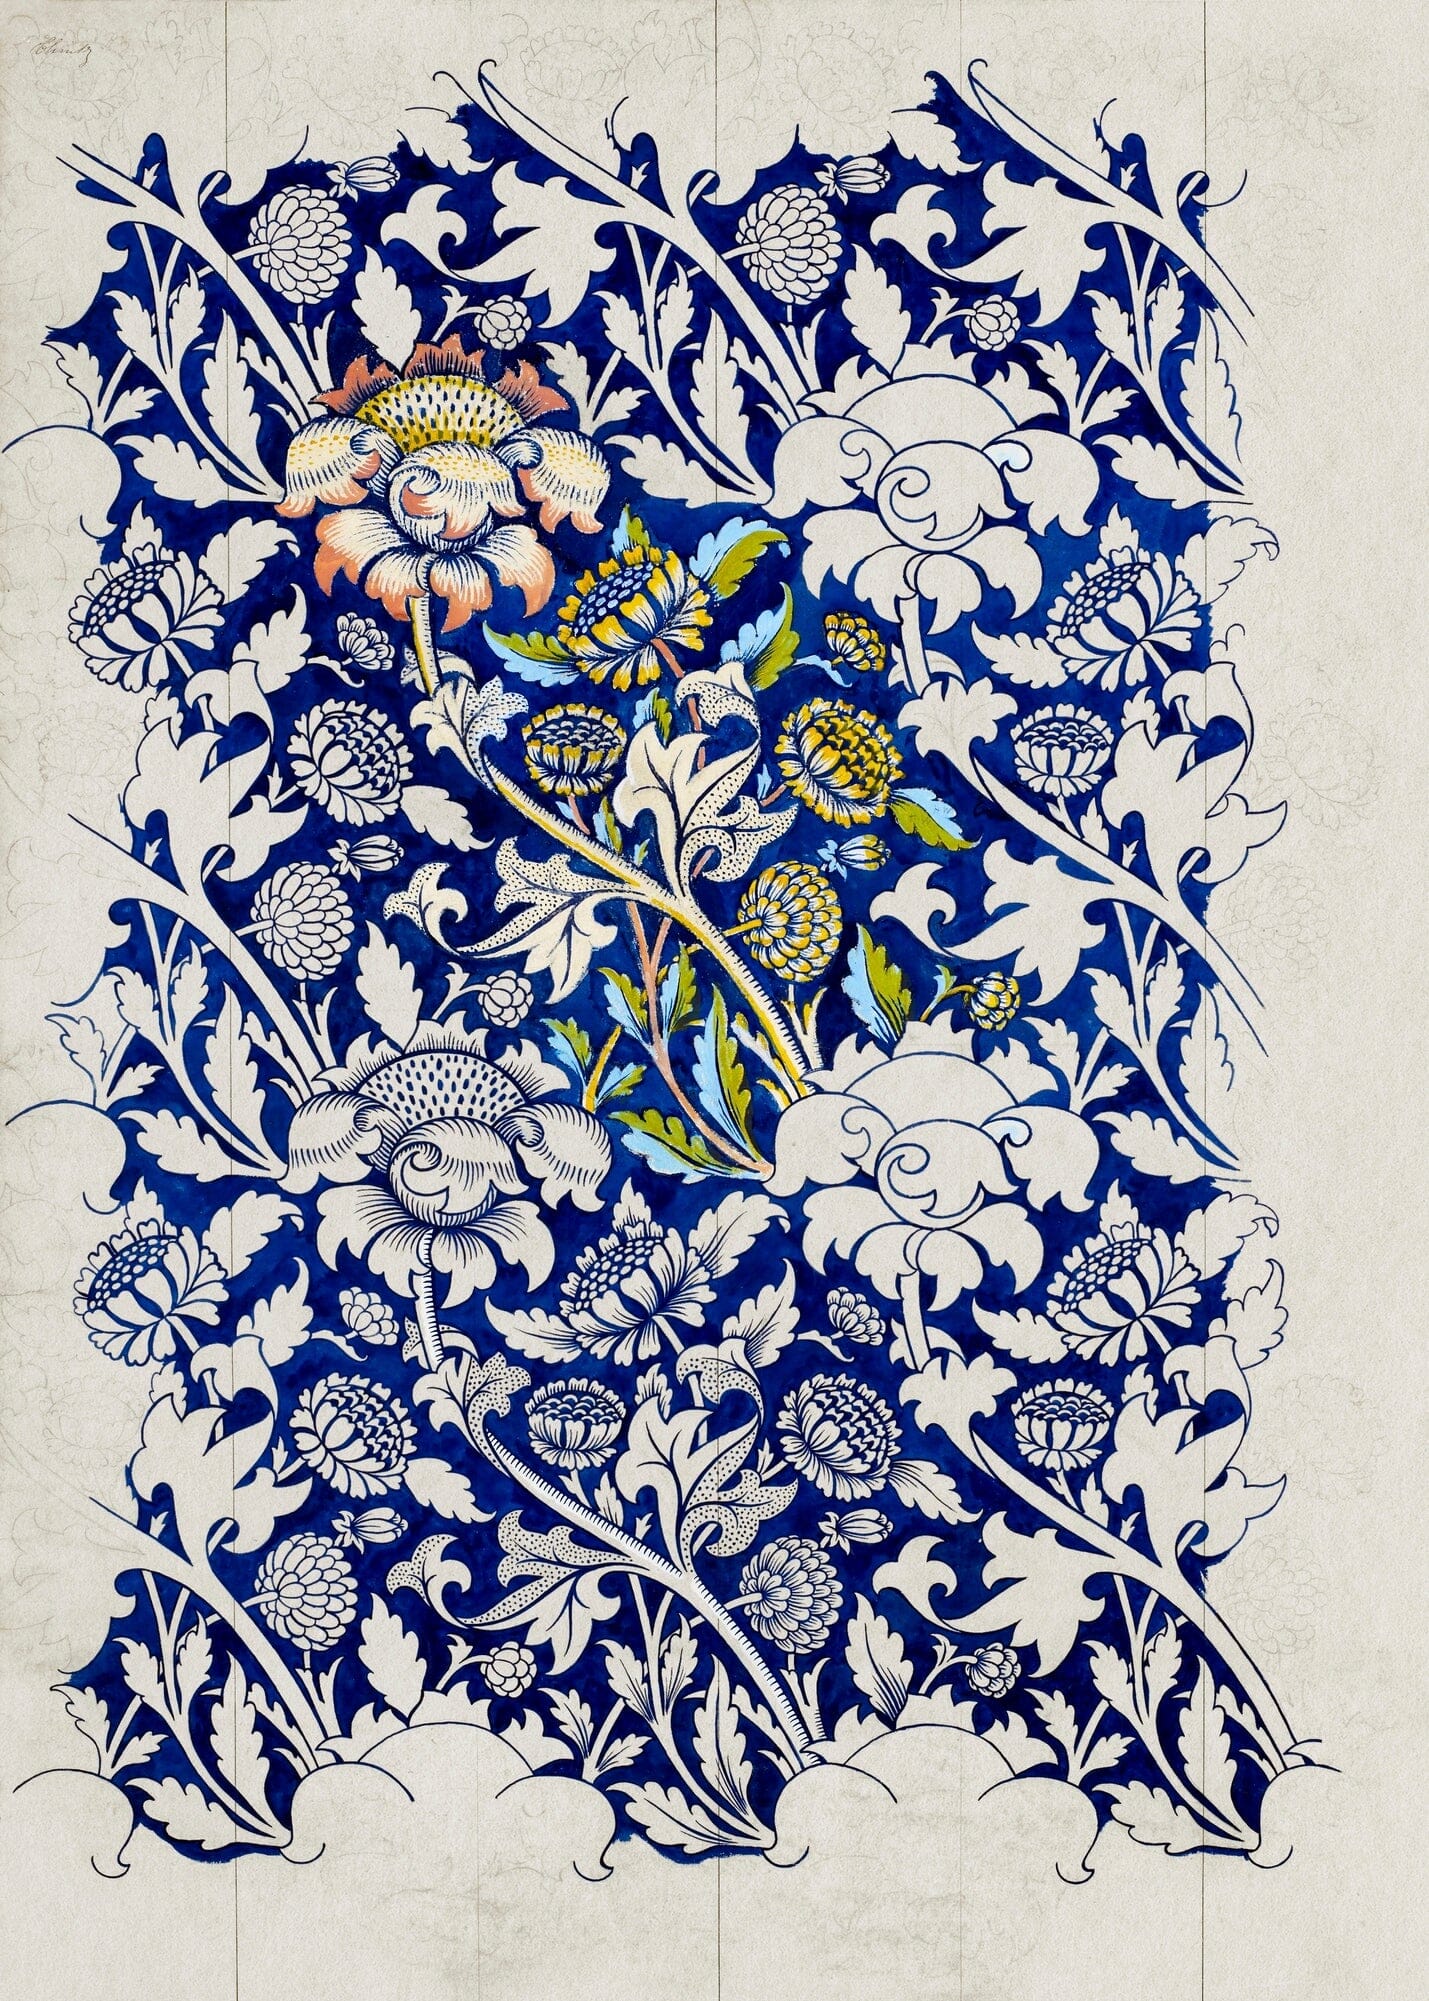 William Morris Exhibition 7 – NordPrints